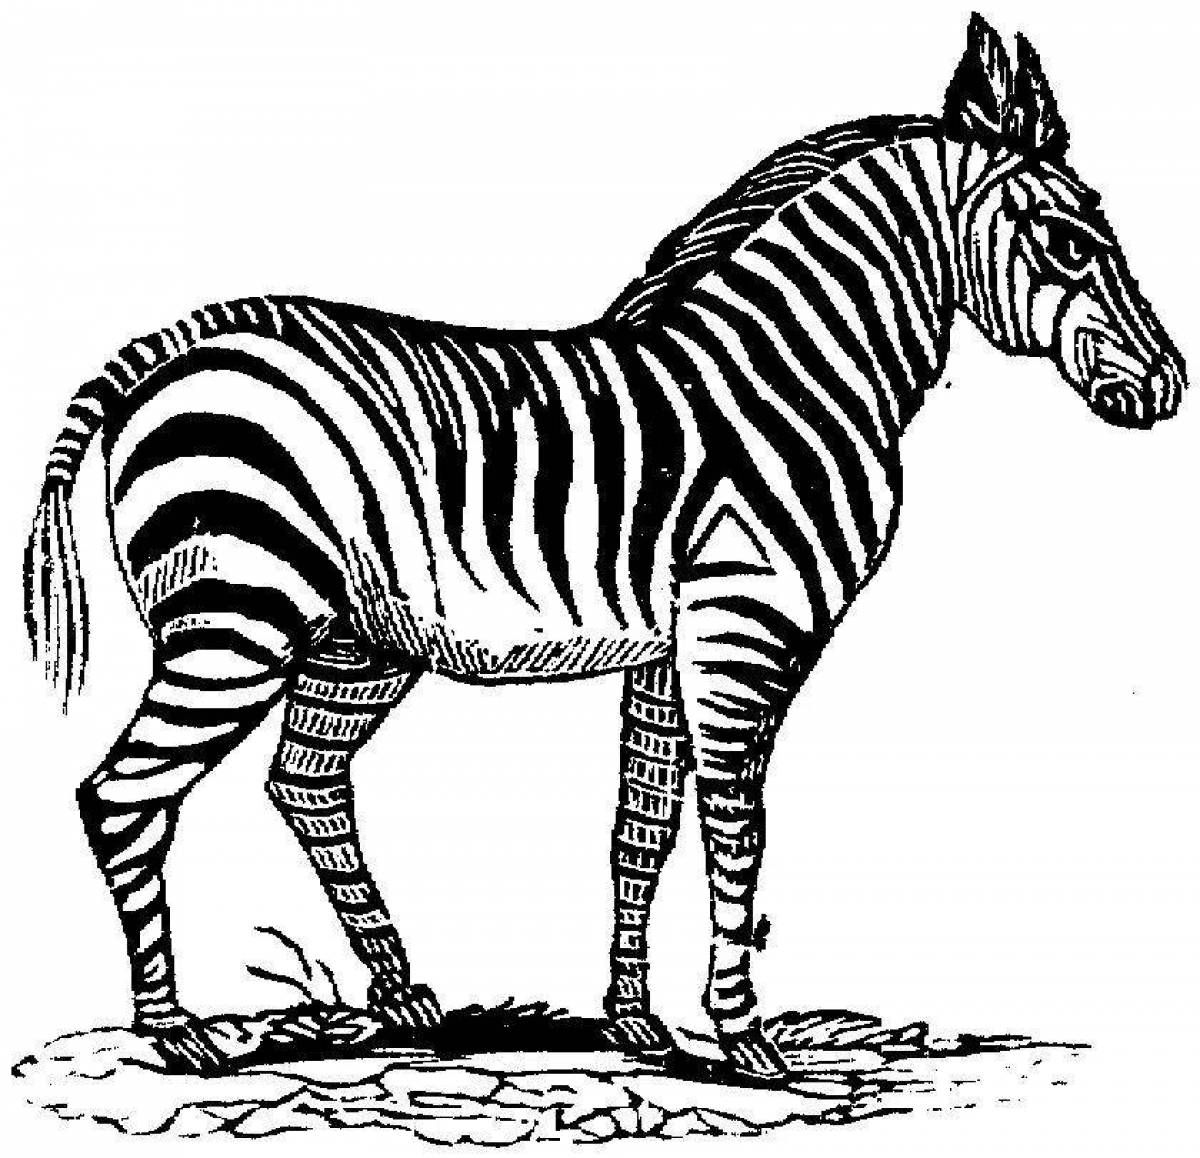 Perfect zebra without stripes